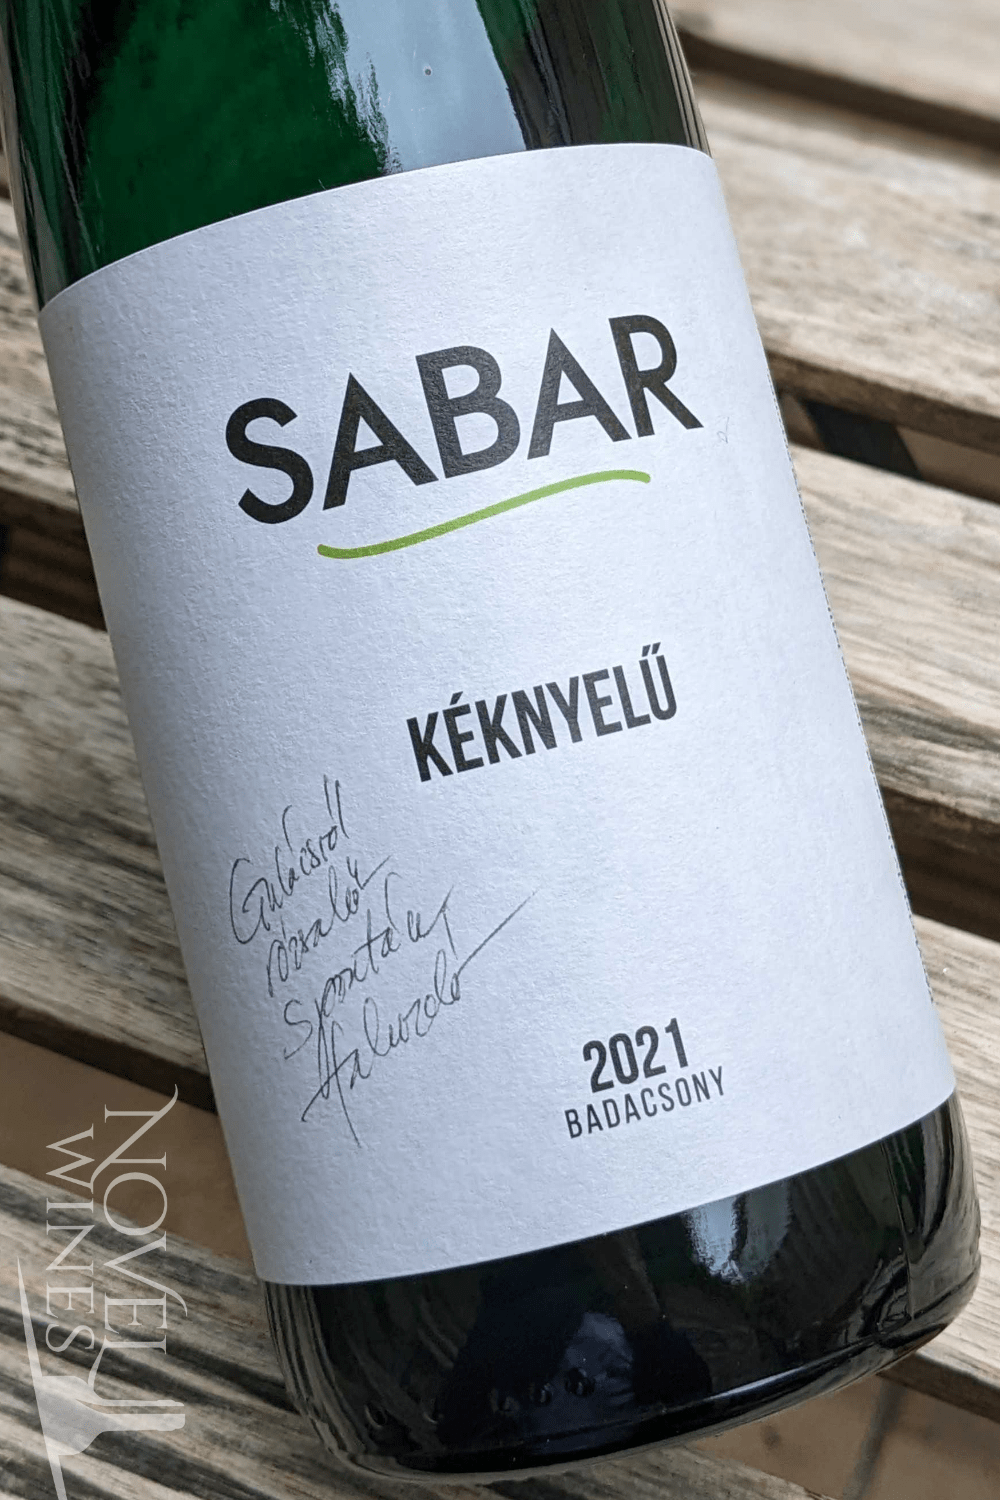 Sabar White Wine Sabar Keknyelu Kõmagas 2020, Hungary